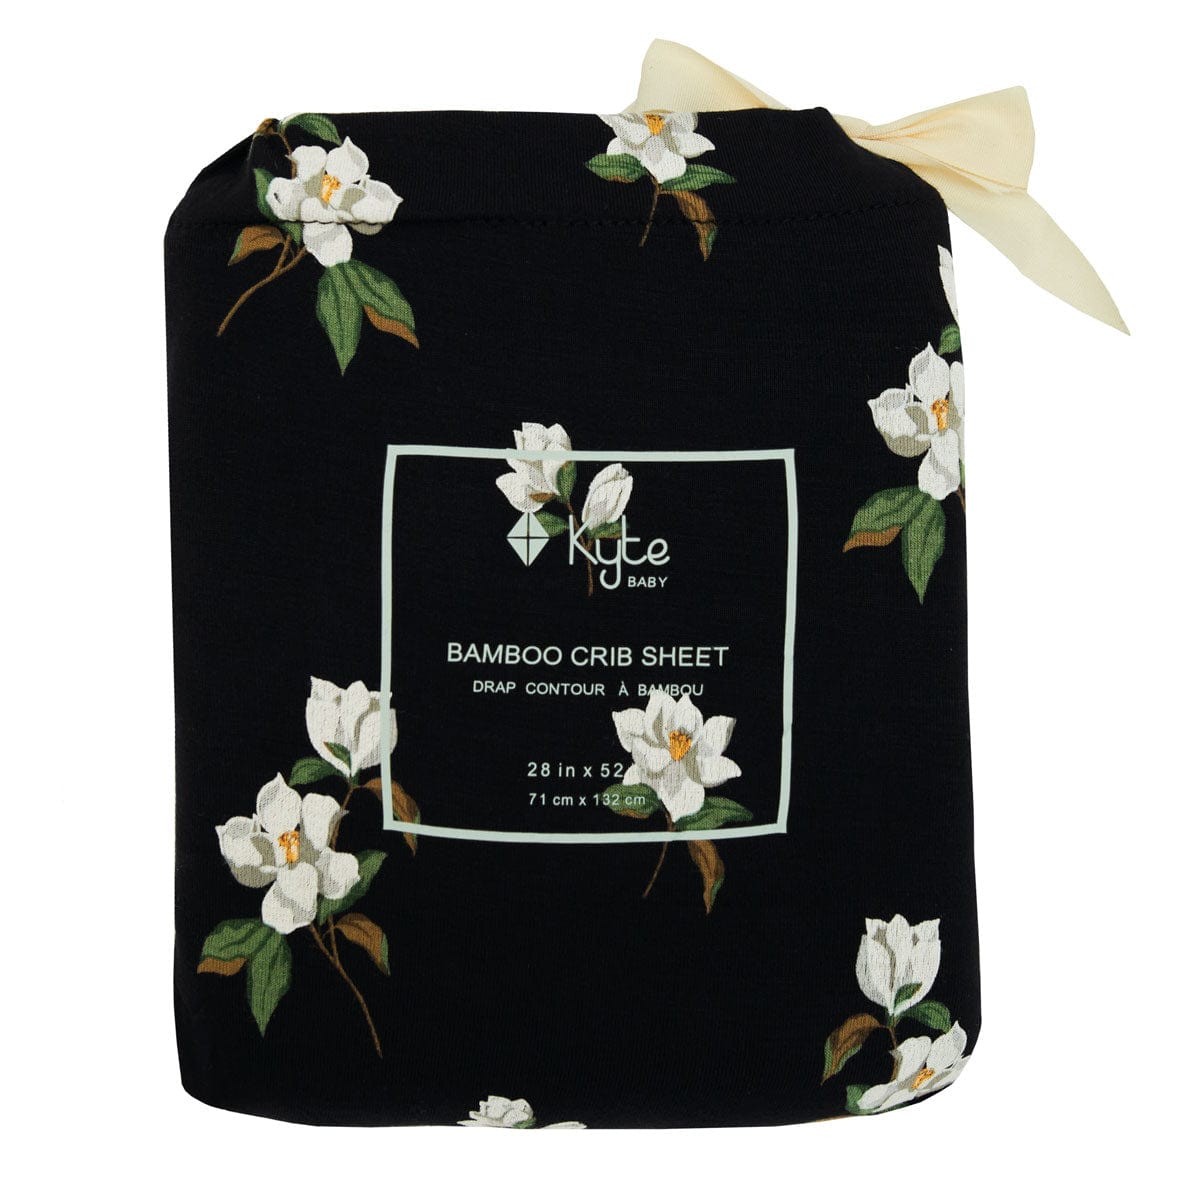 Small Midnight Magnolia pattern Kyte Baby standard Crib Sheet in bag